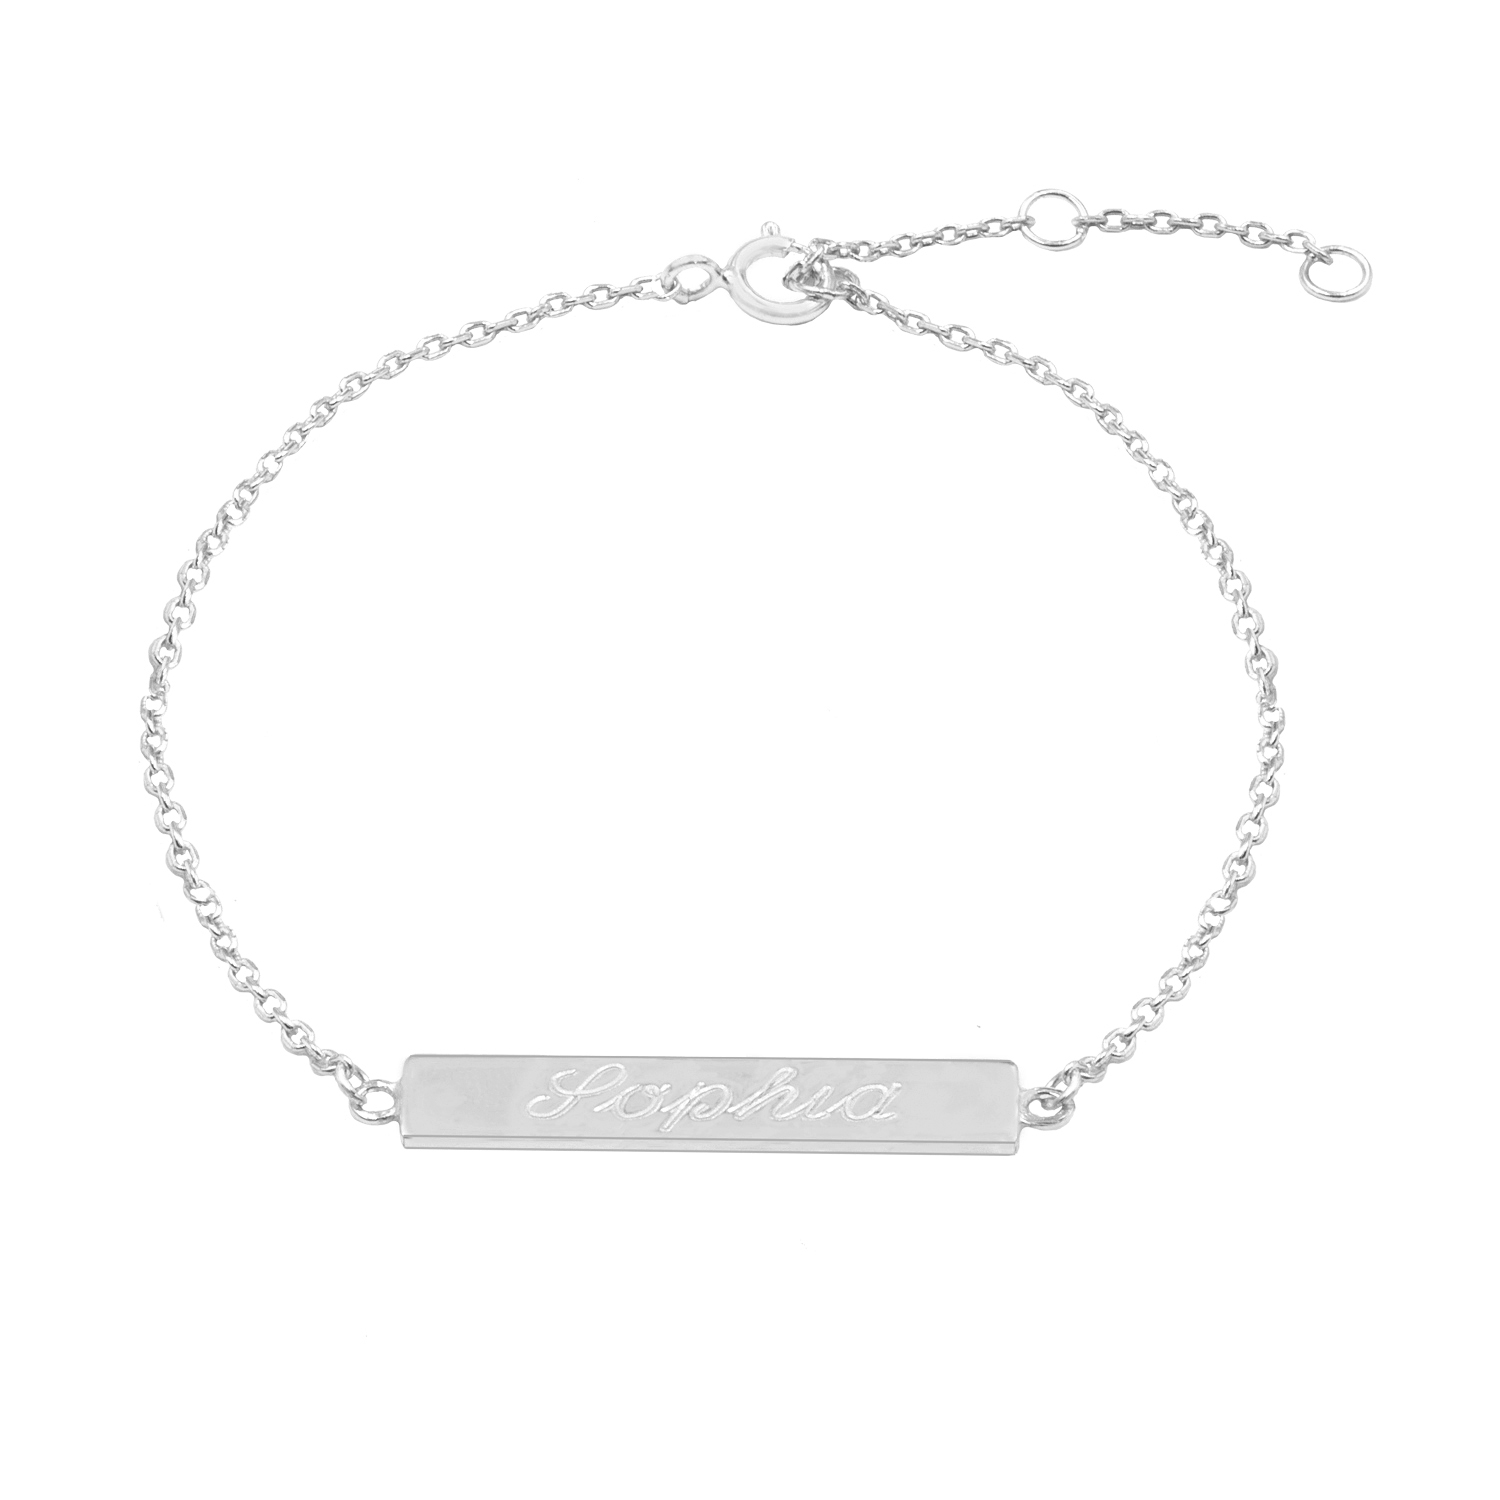 The M Jewelers Script Bar Bracelet